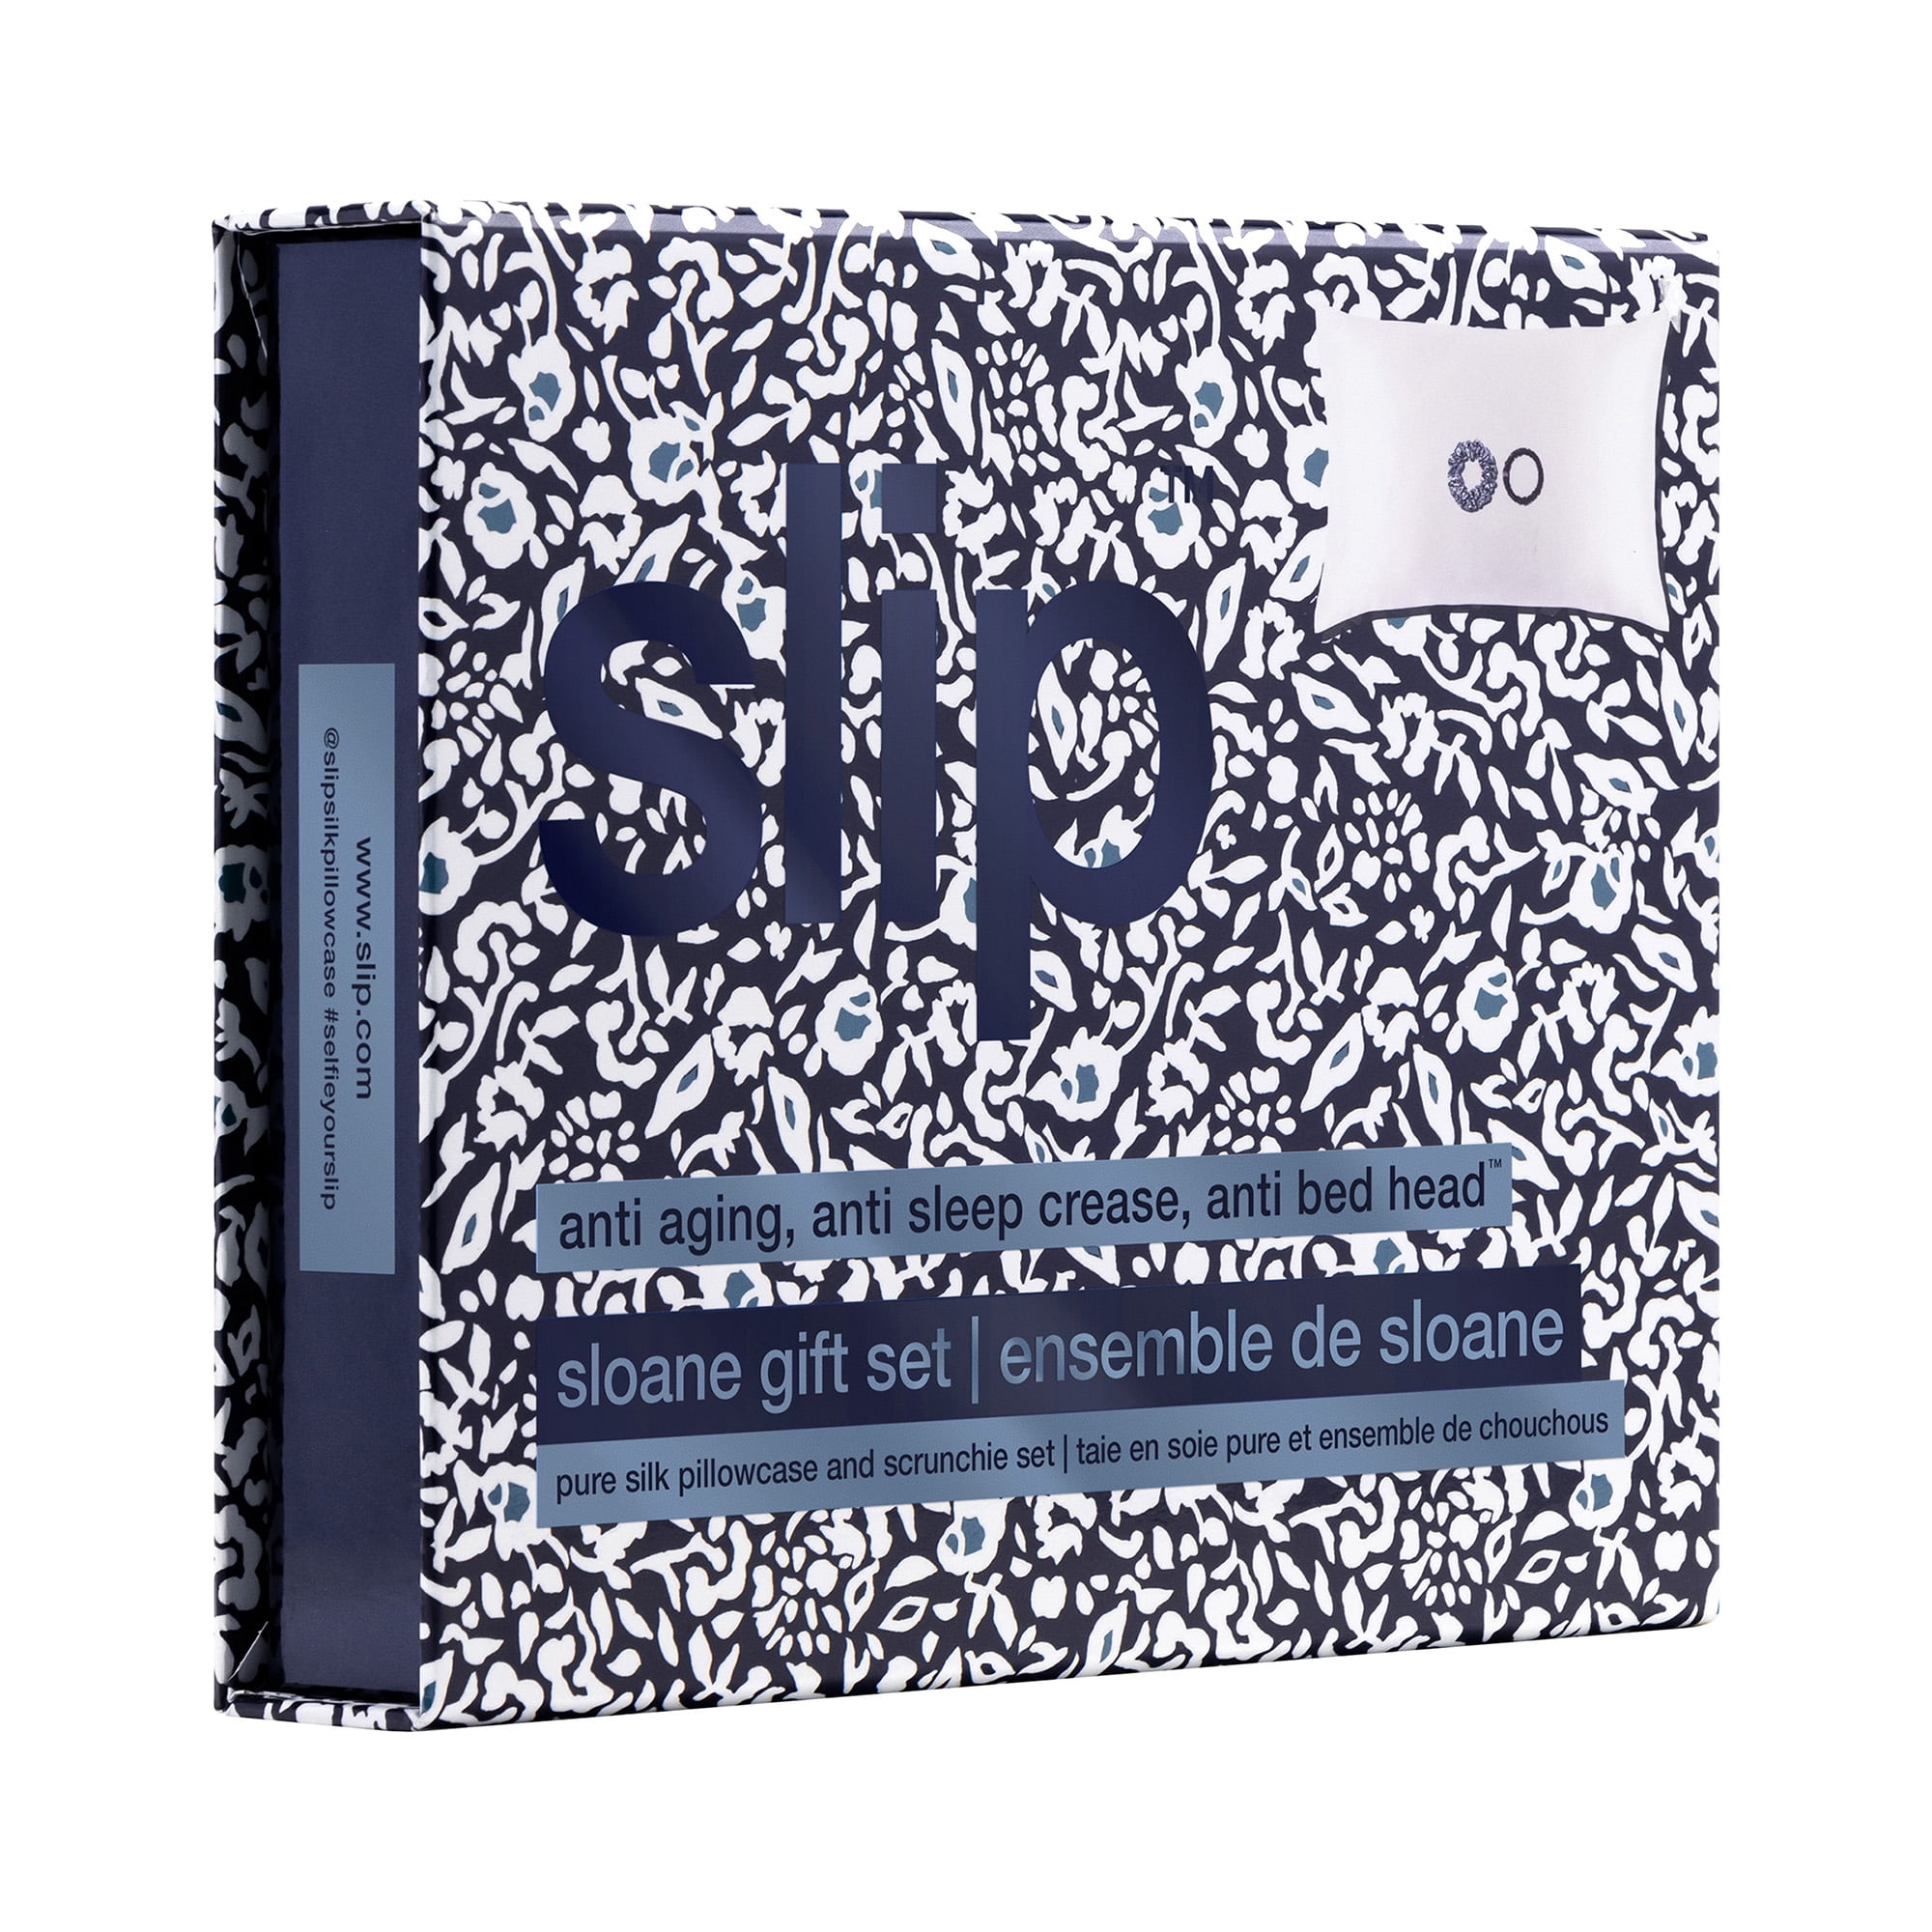 Slip Silk Queen Pillowcase and Scrunchies Gift Set - Sloane, 3 ct